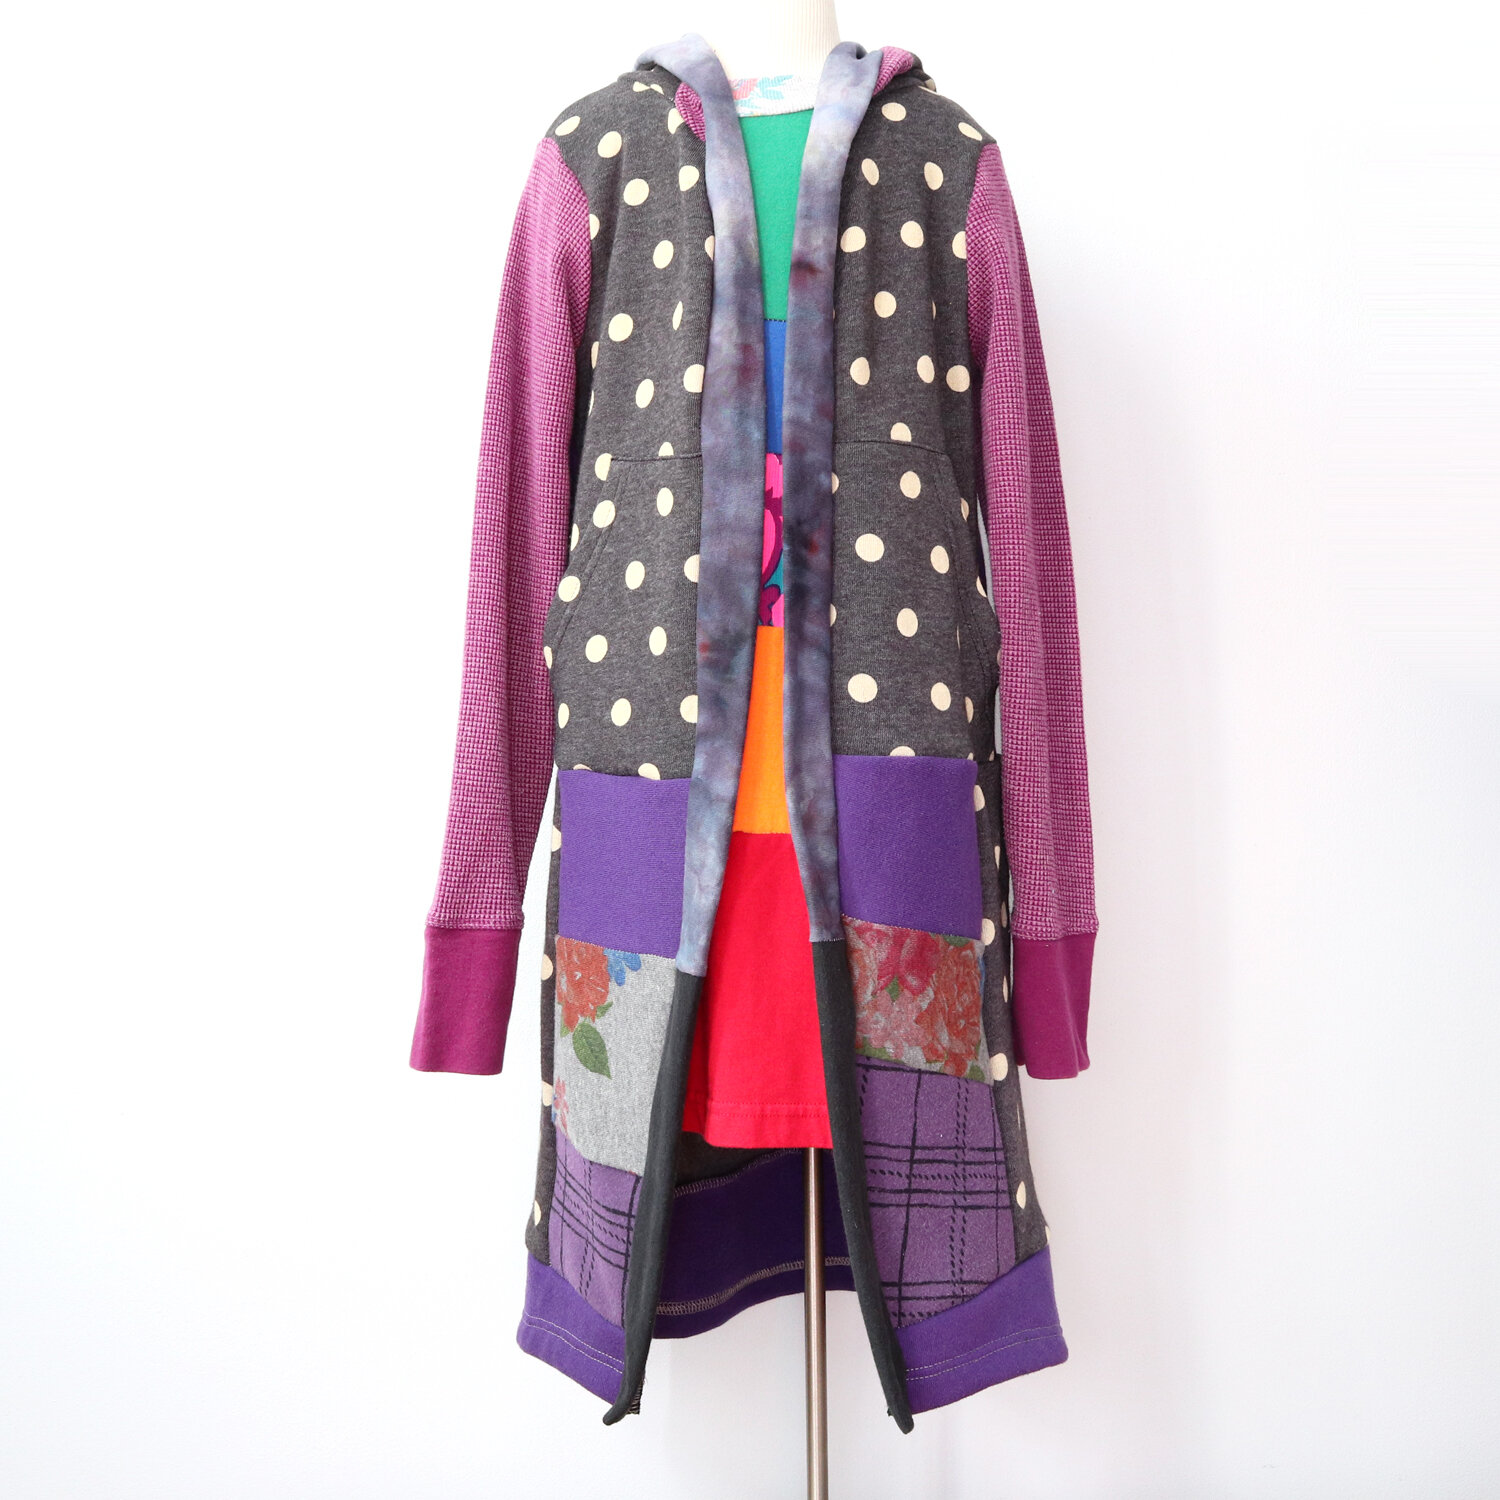 form 8:10 patchwork:purple:dots:hooded:robe:cardigan.jpg